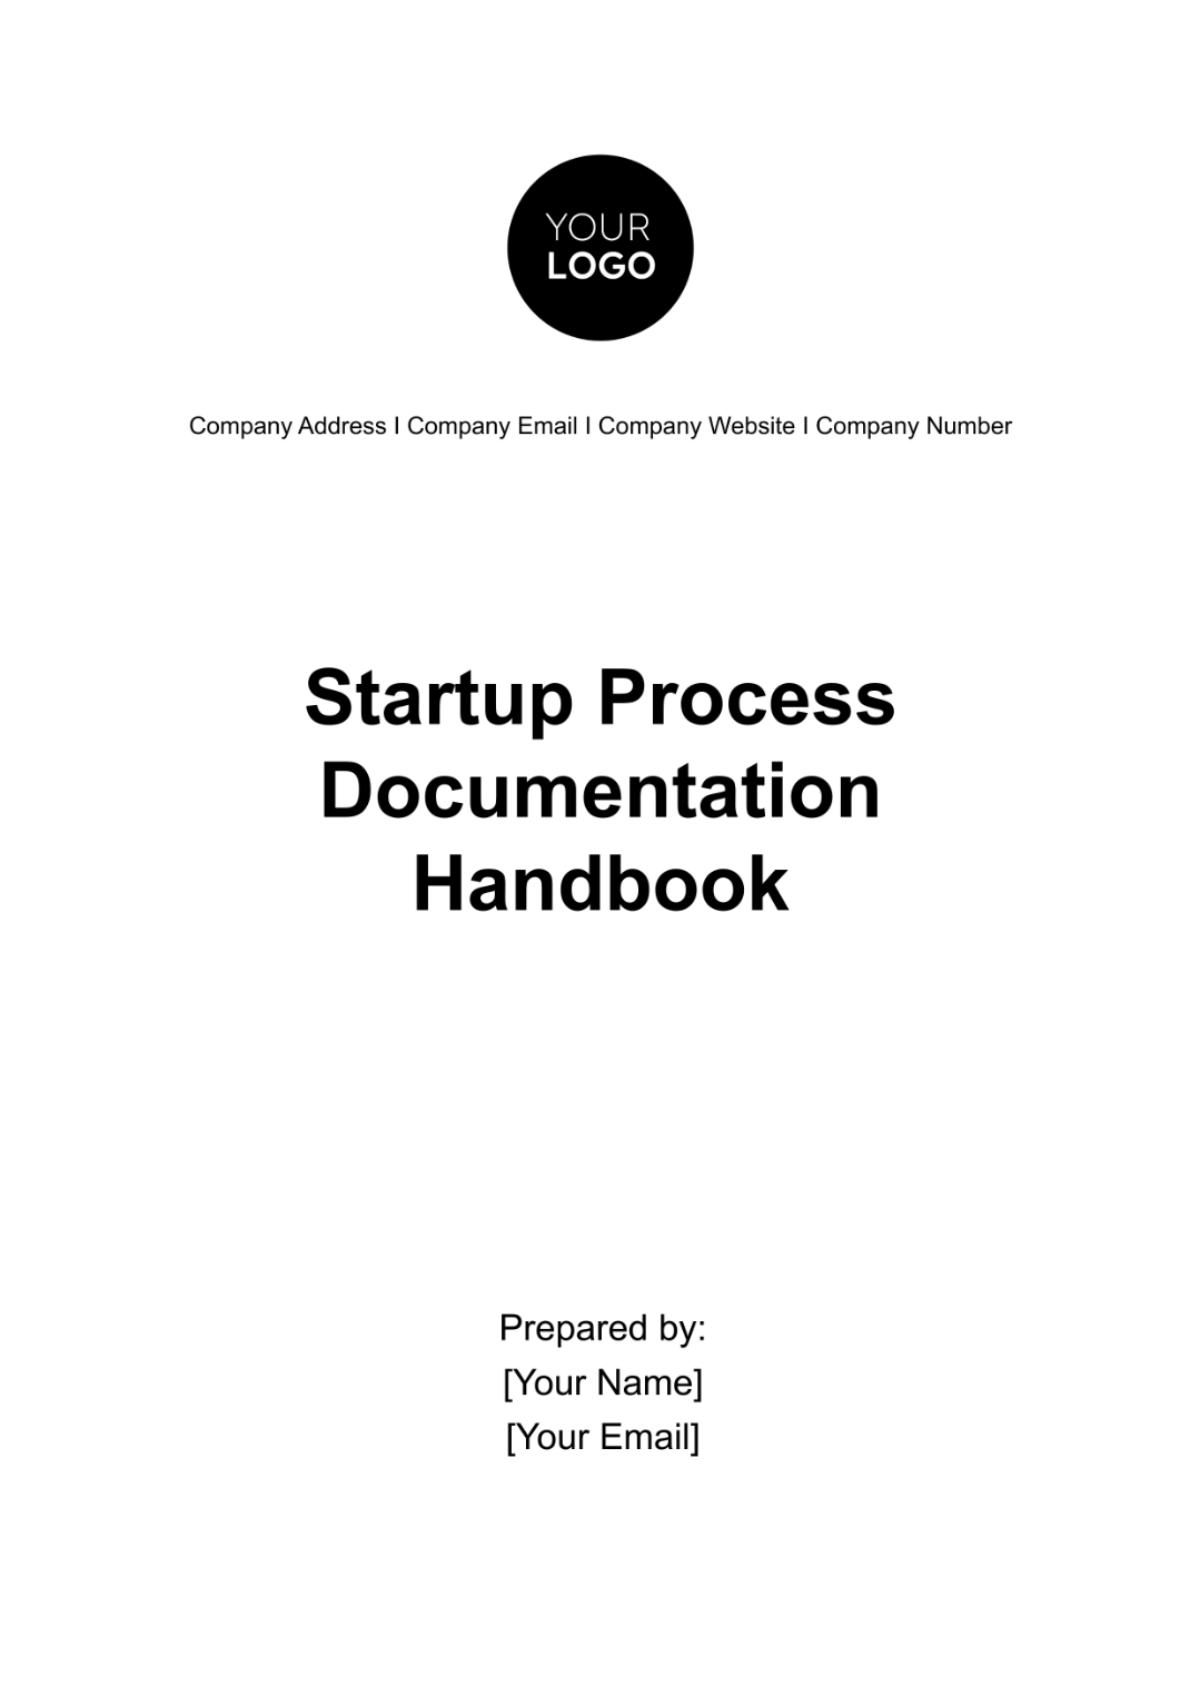 Startup Process Documentation Handbook Template